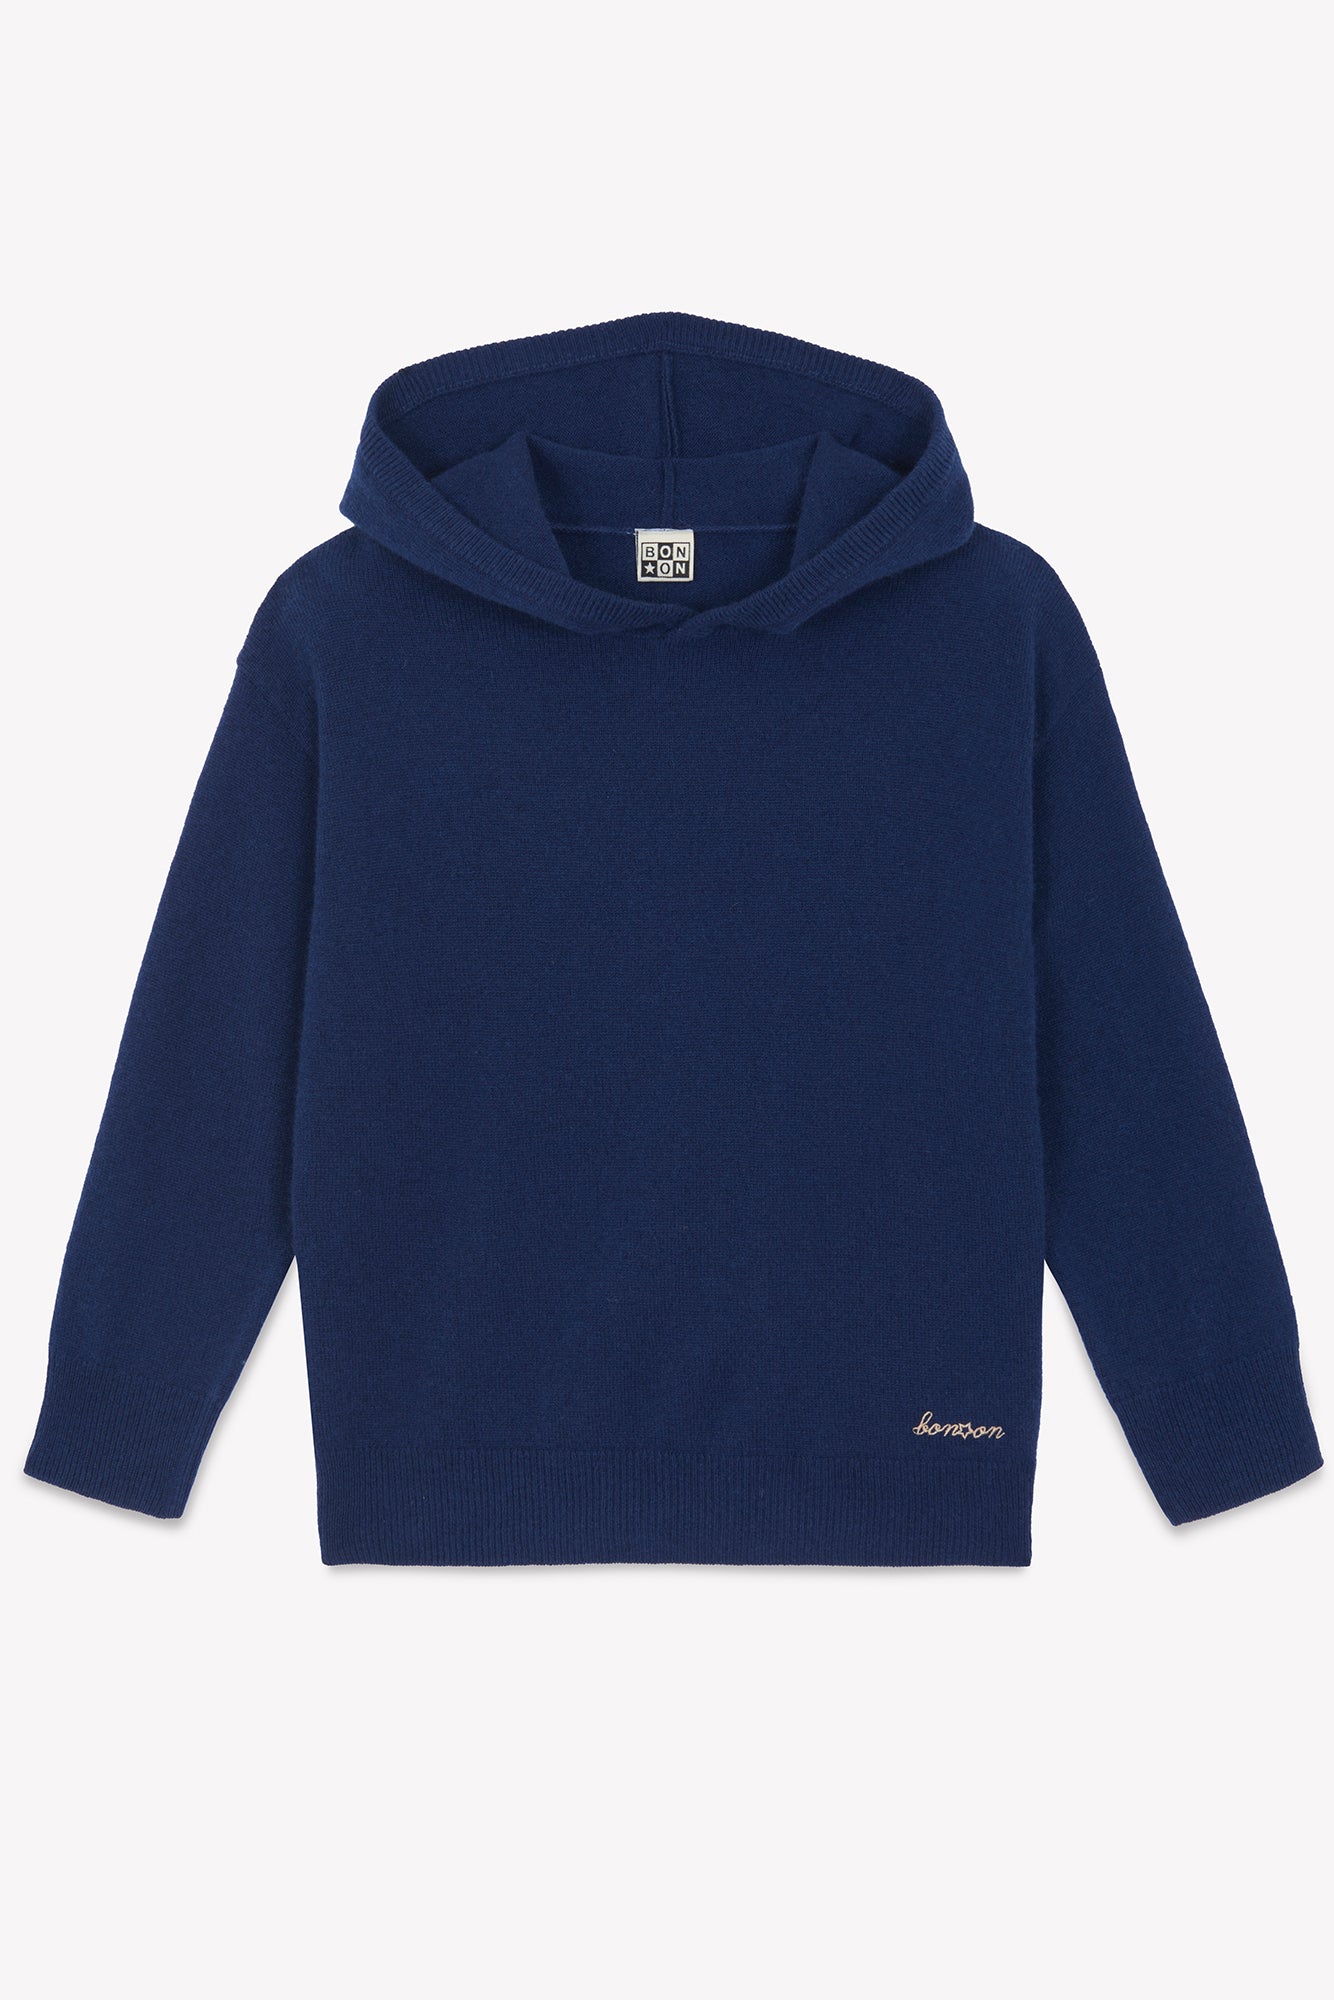 Sweater Blue 100% Cashmere